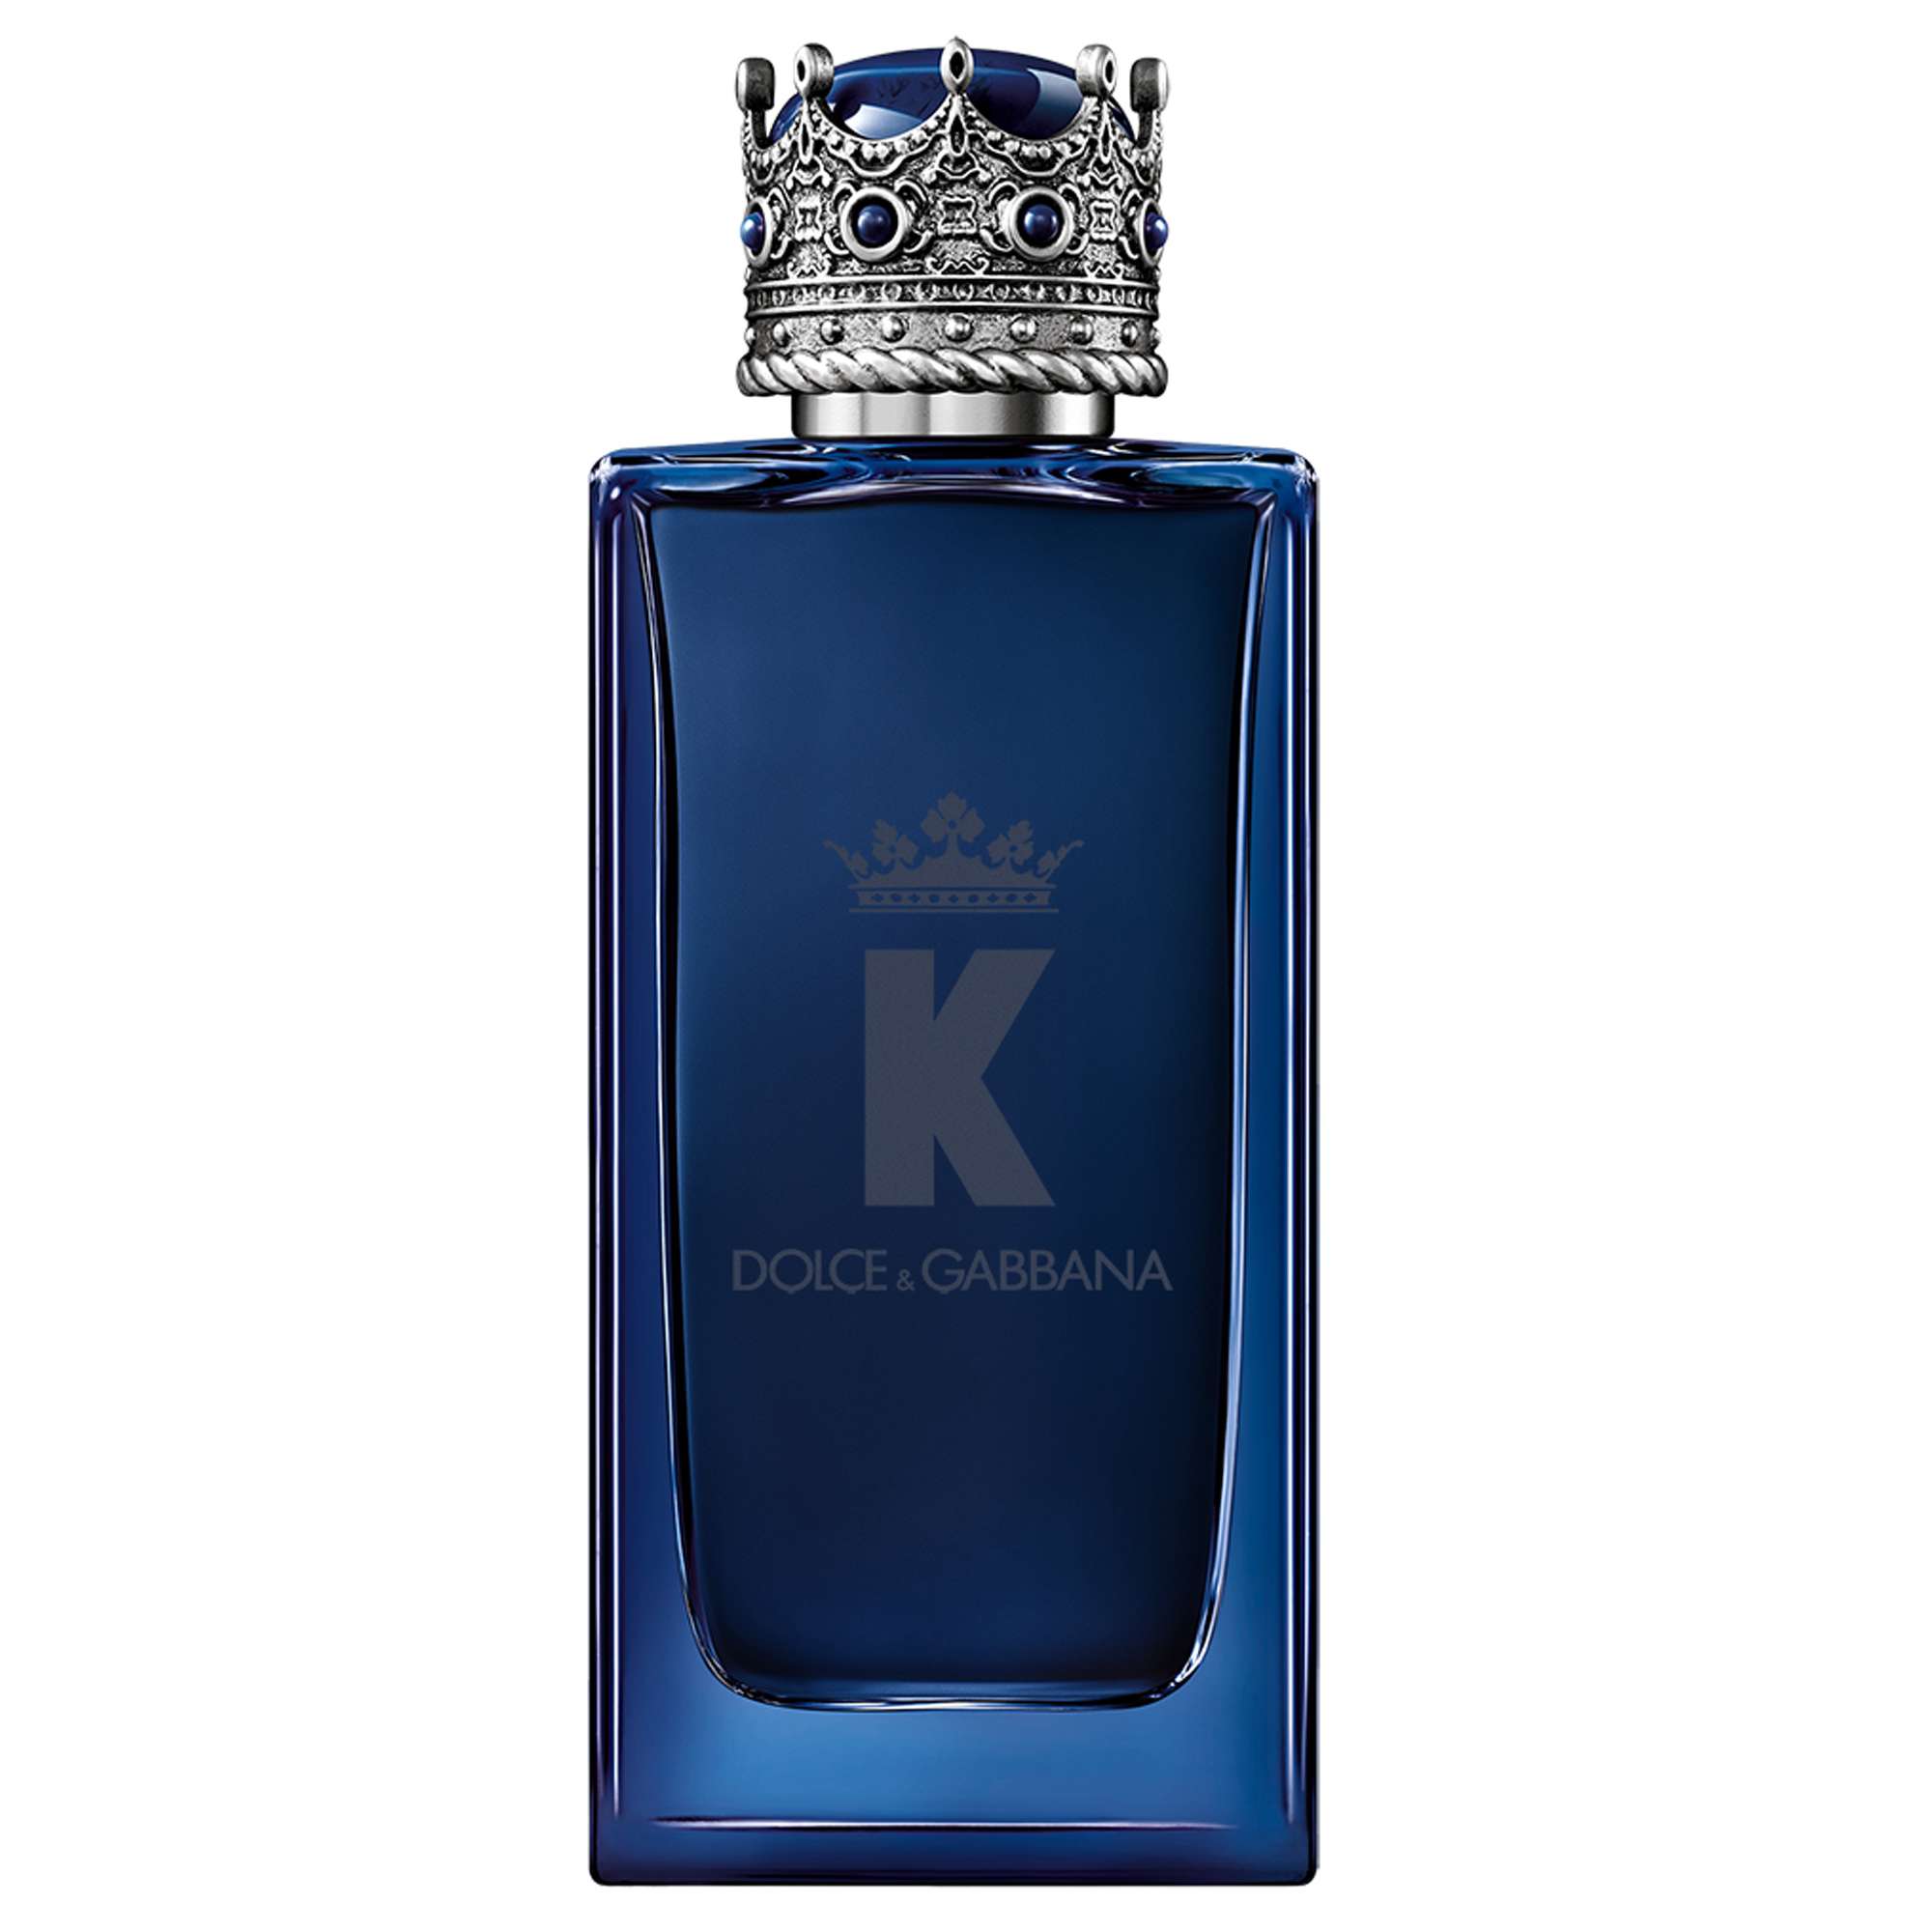 Image of Dolce&Gabbana K Eau de Parfum Intense Spray 100ml